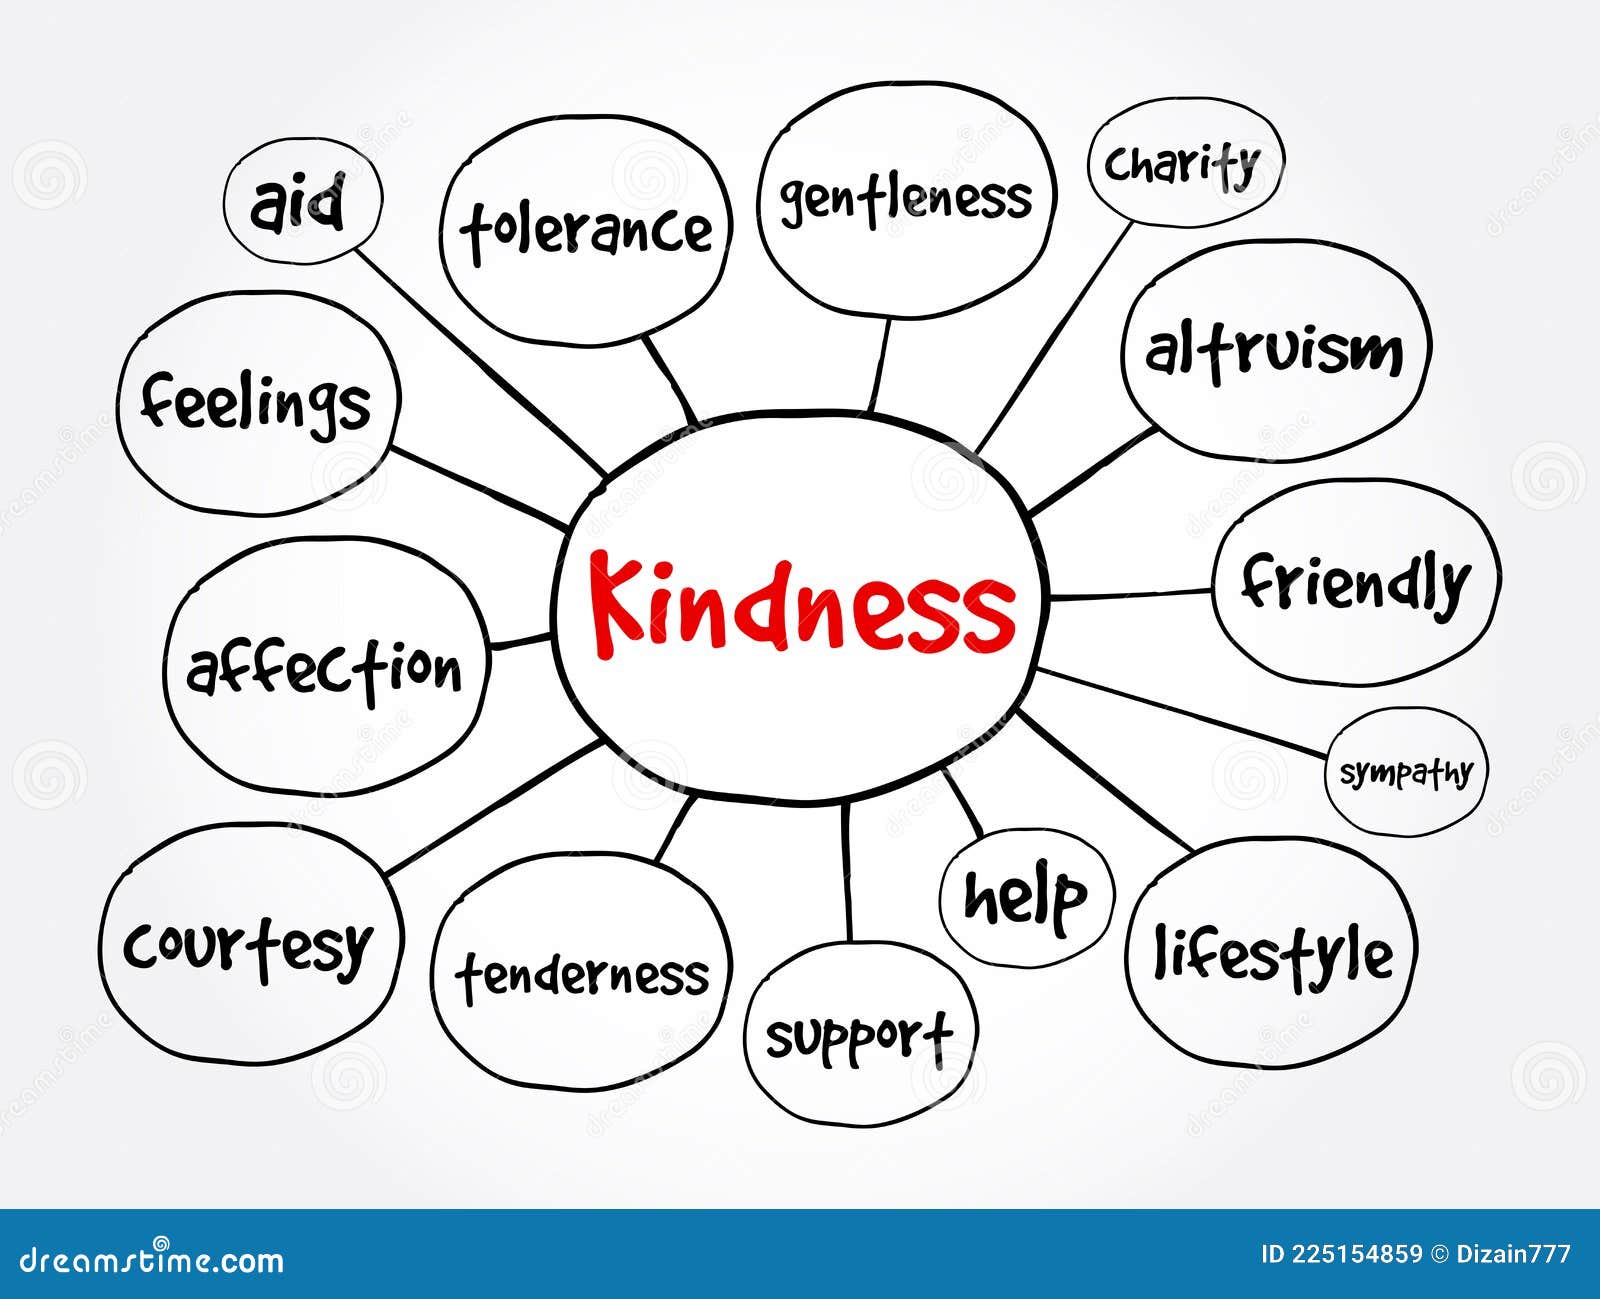 presentation on importance of kindness